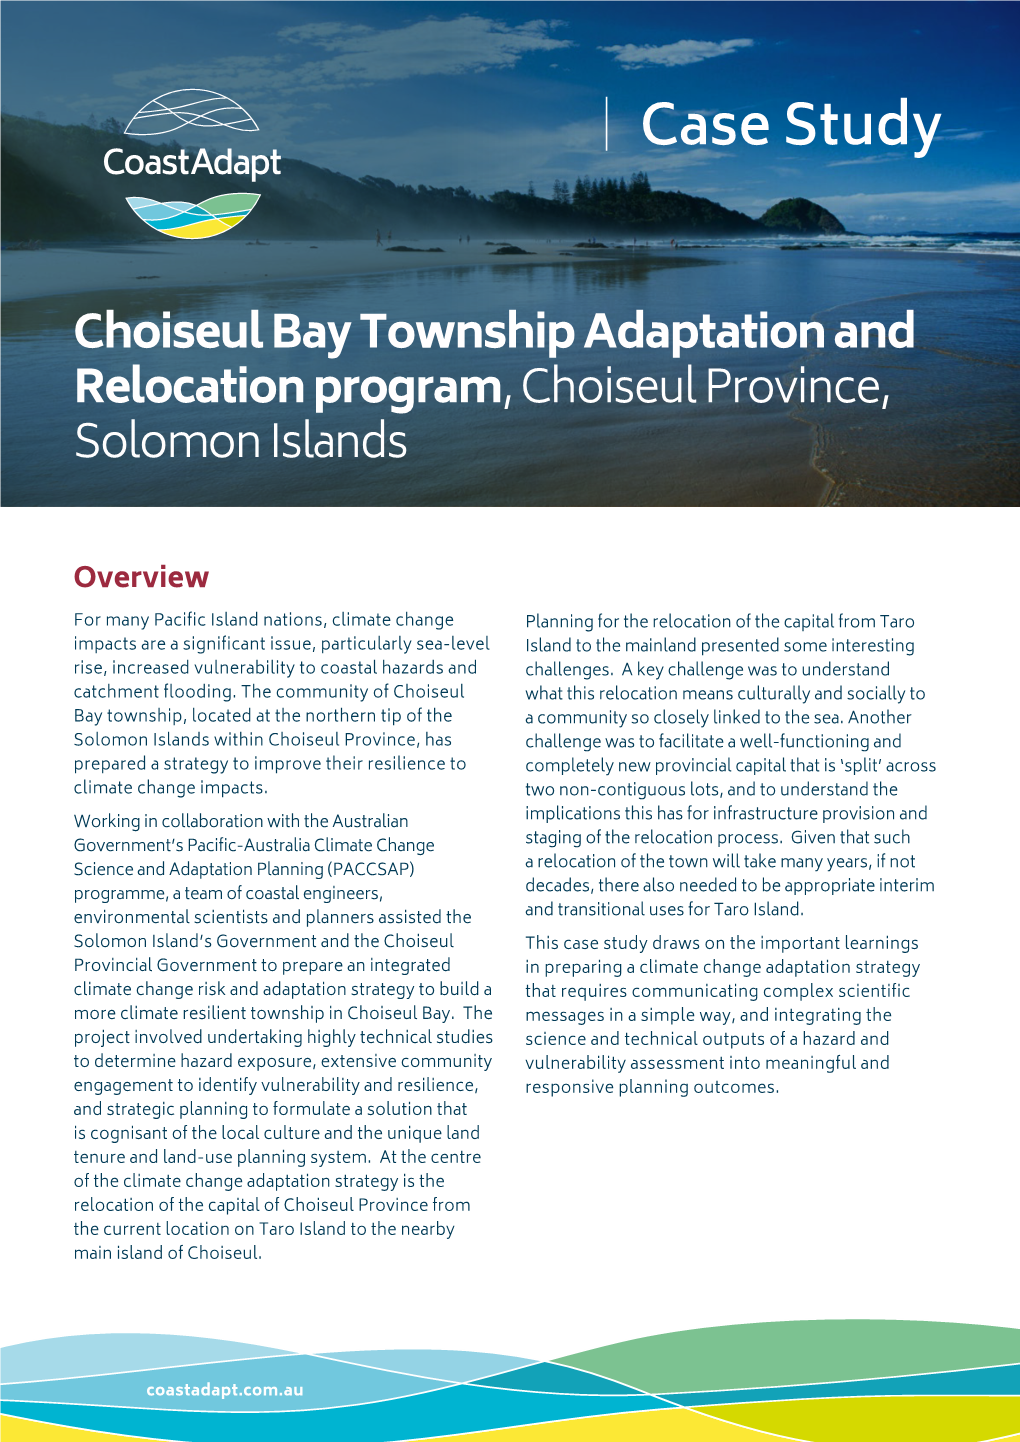 Choiseul Bay Township Adaptation and Relocation Program, Choiseul Province, Solomon Islands